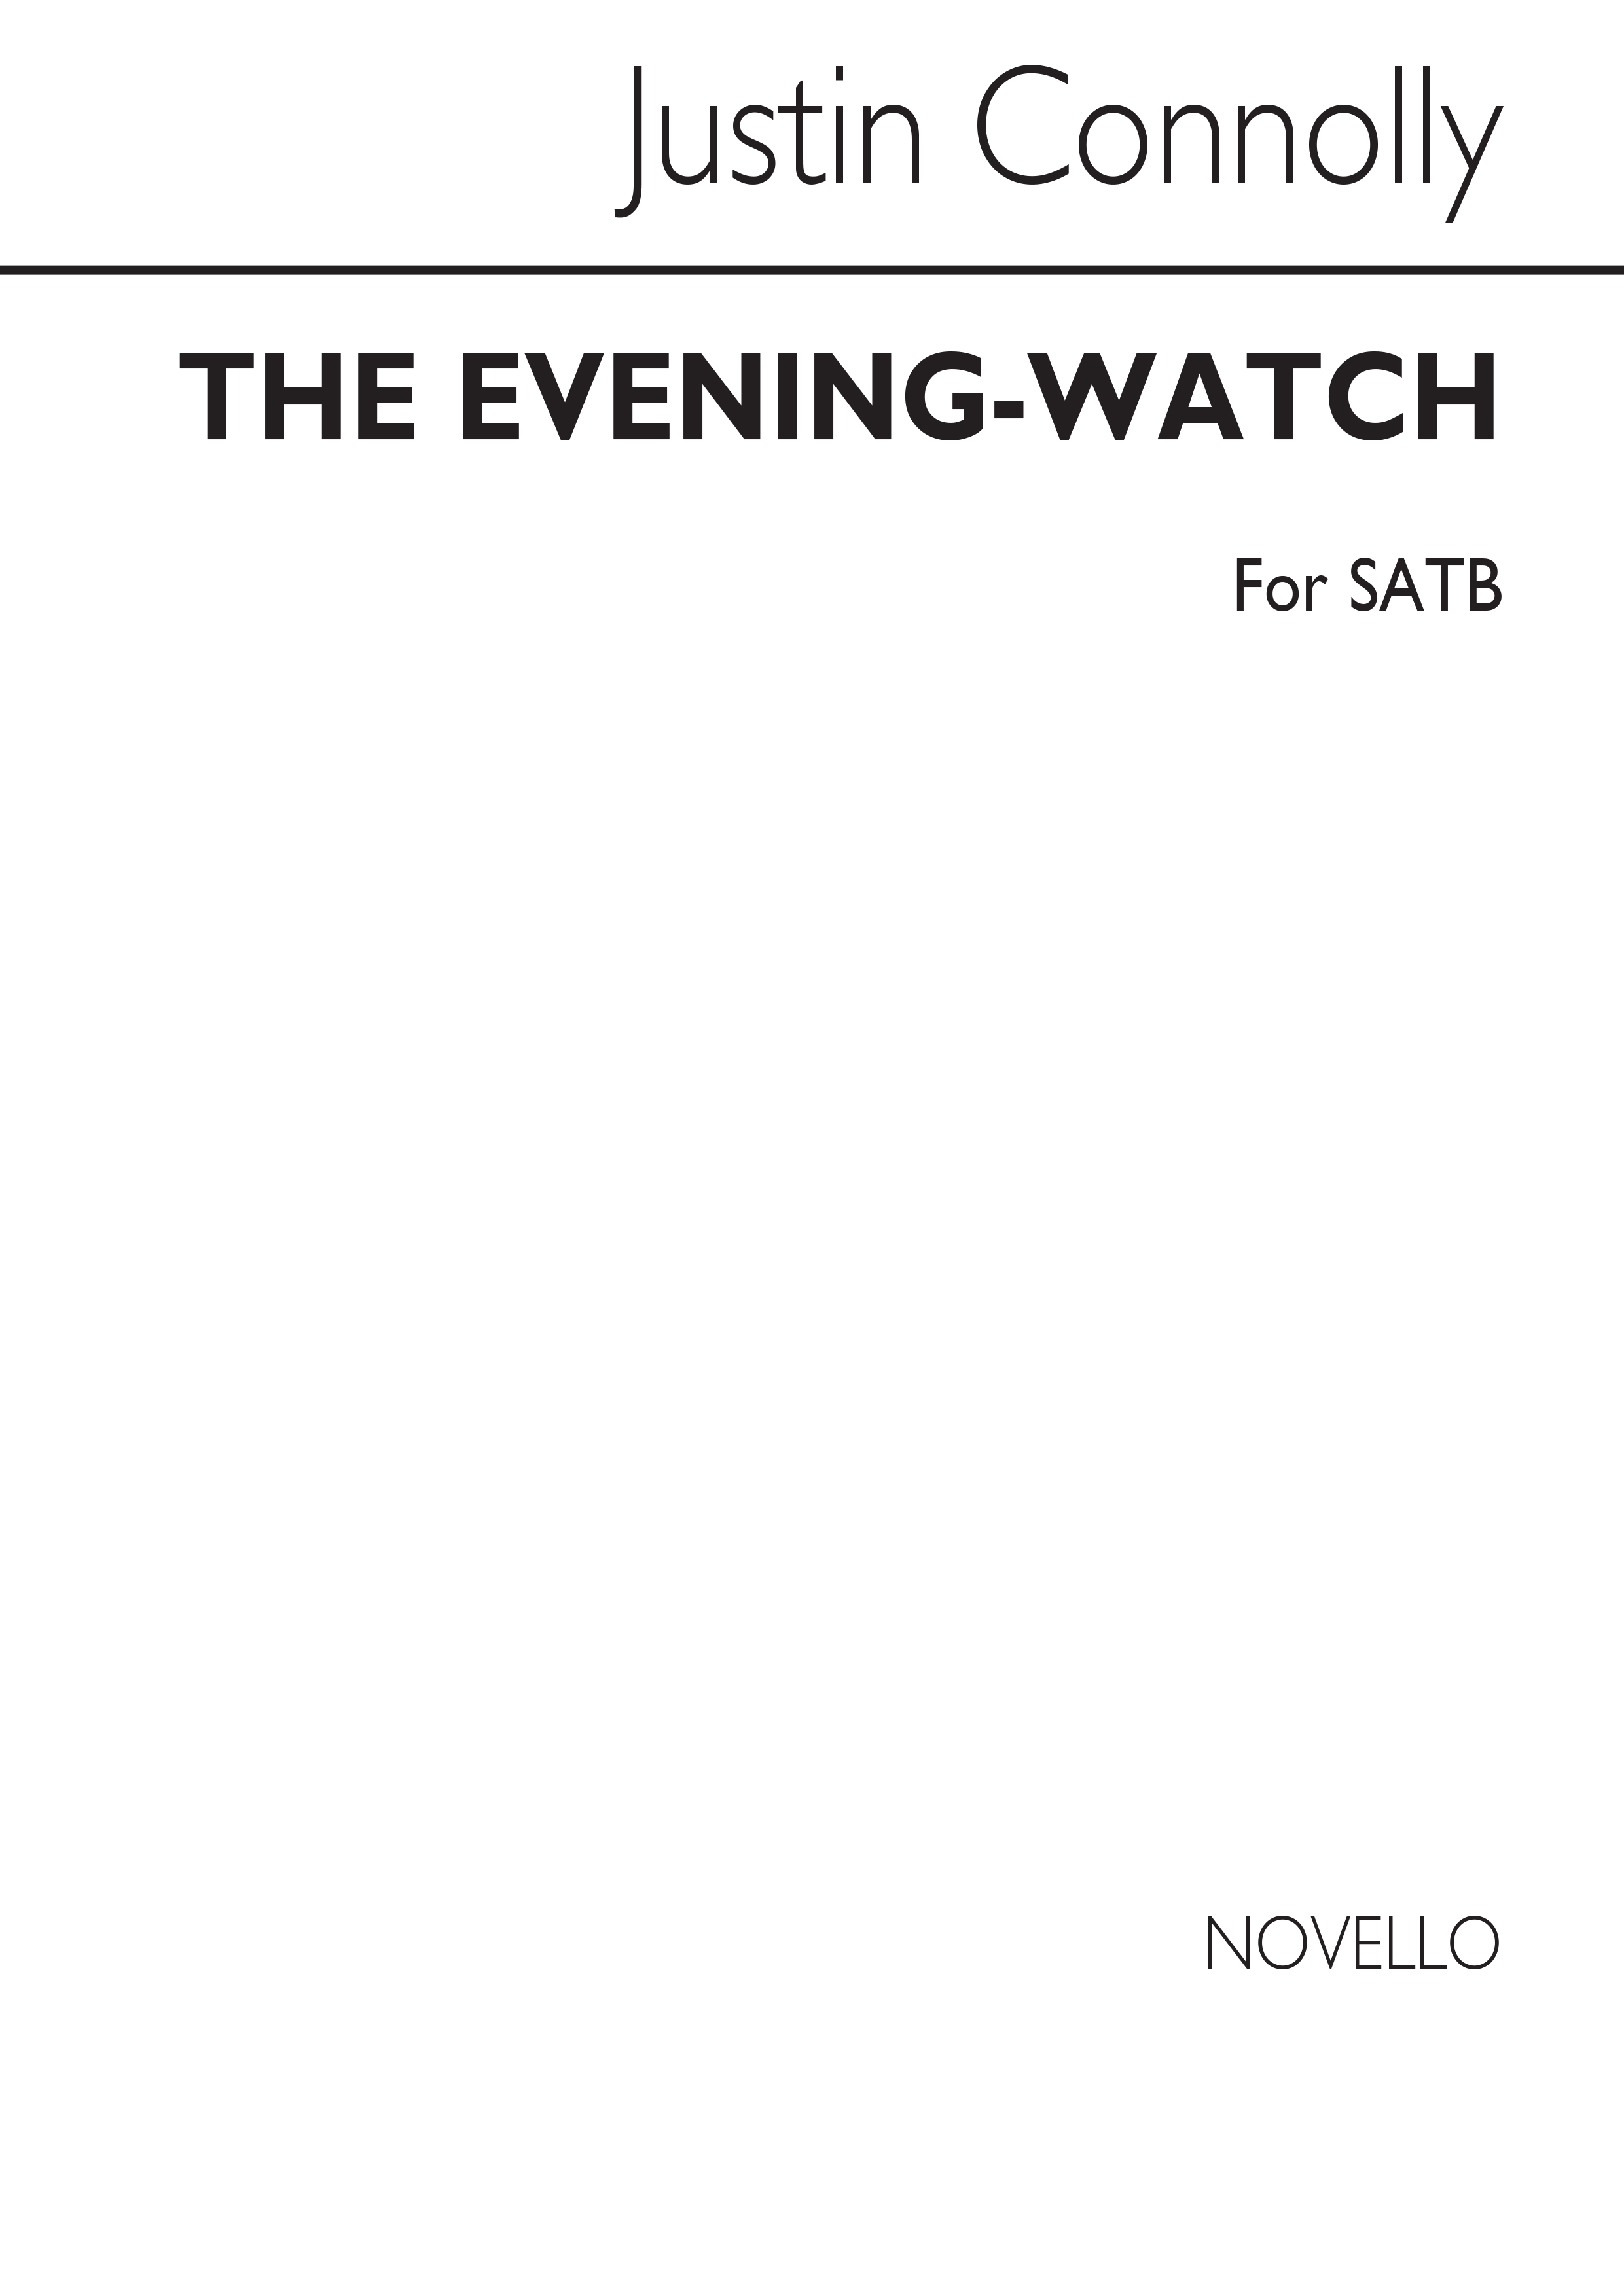 Connolly: Evening Watch for SATB Chorus